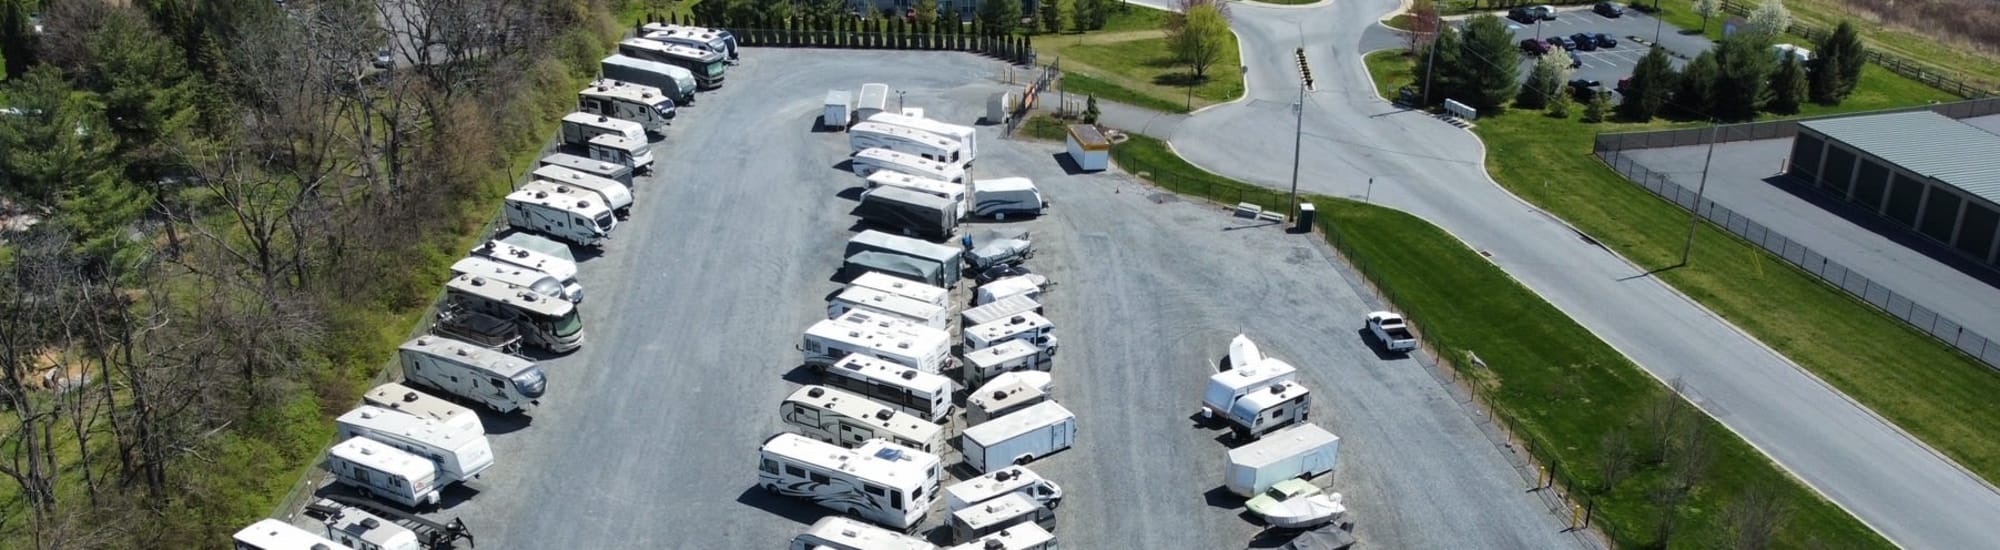 Parking storage facility at Storage World in Sinking Spring, Pennsylvania